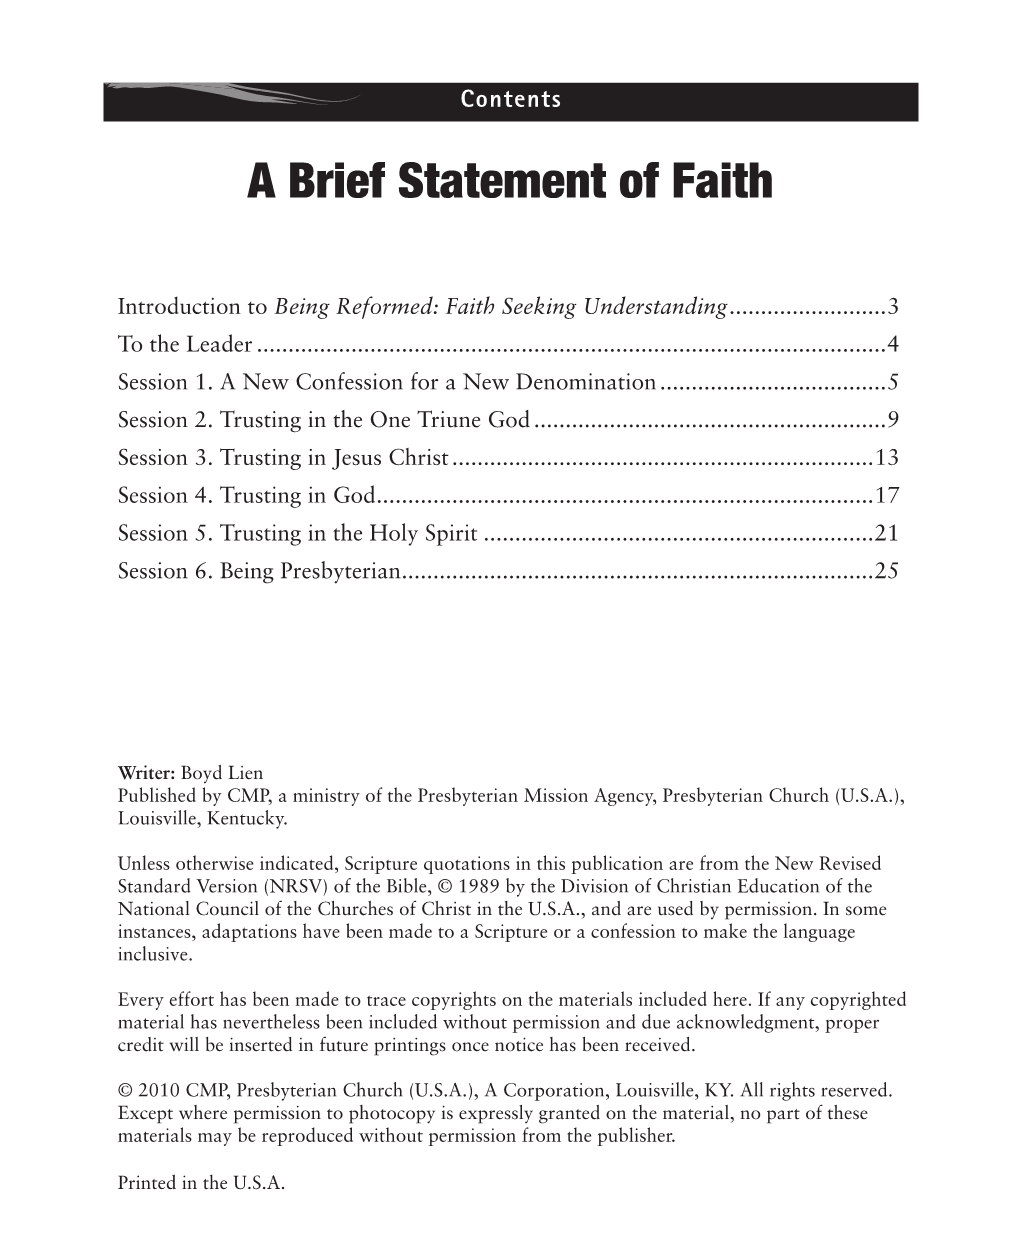 A Brief Statement of Faith